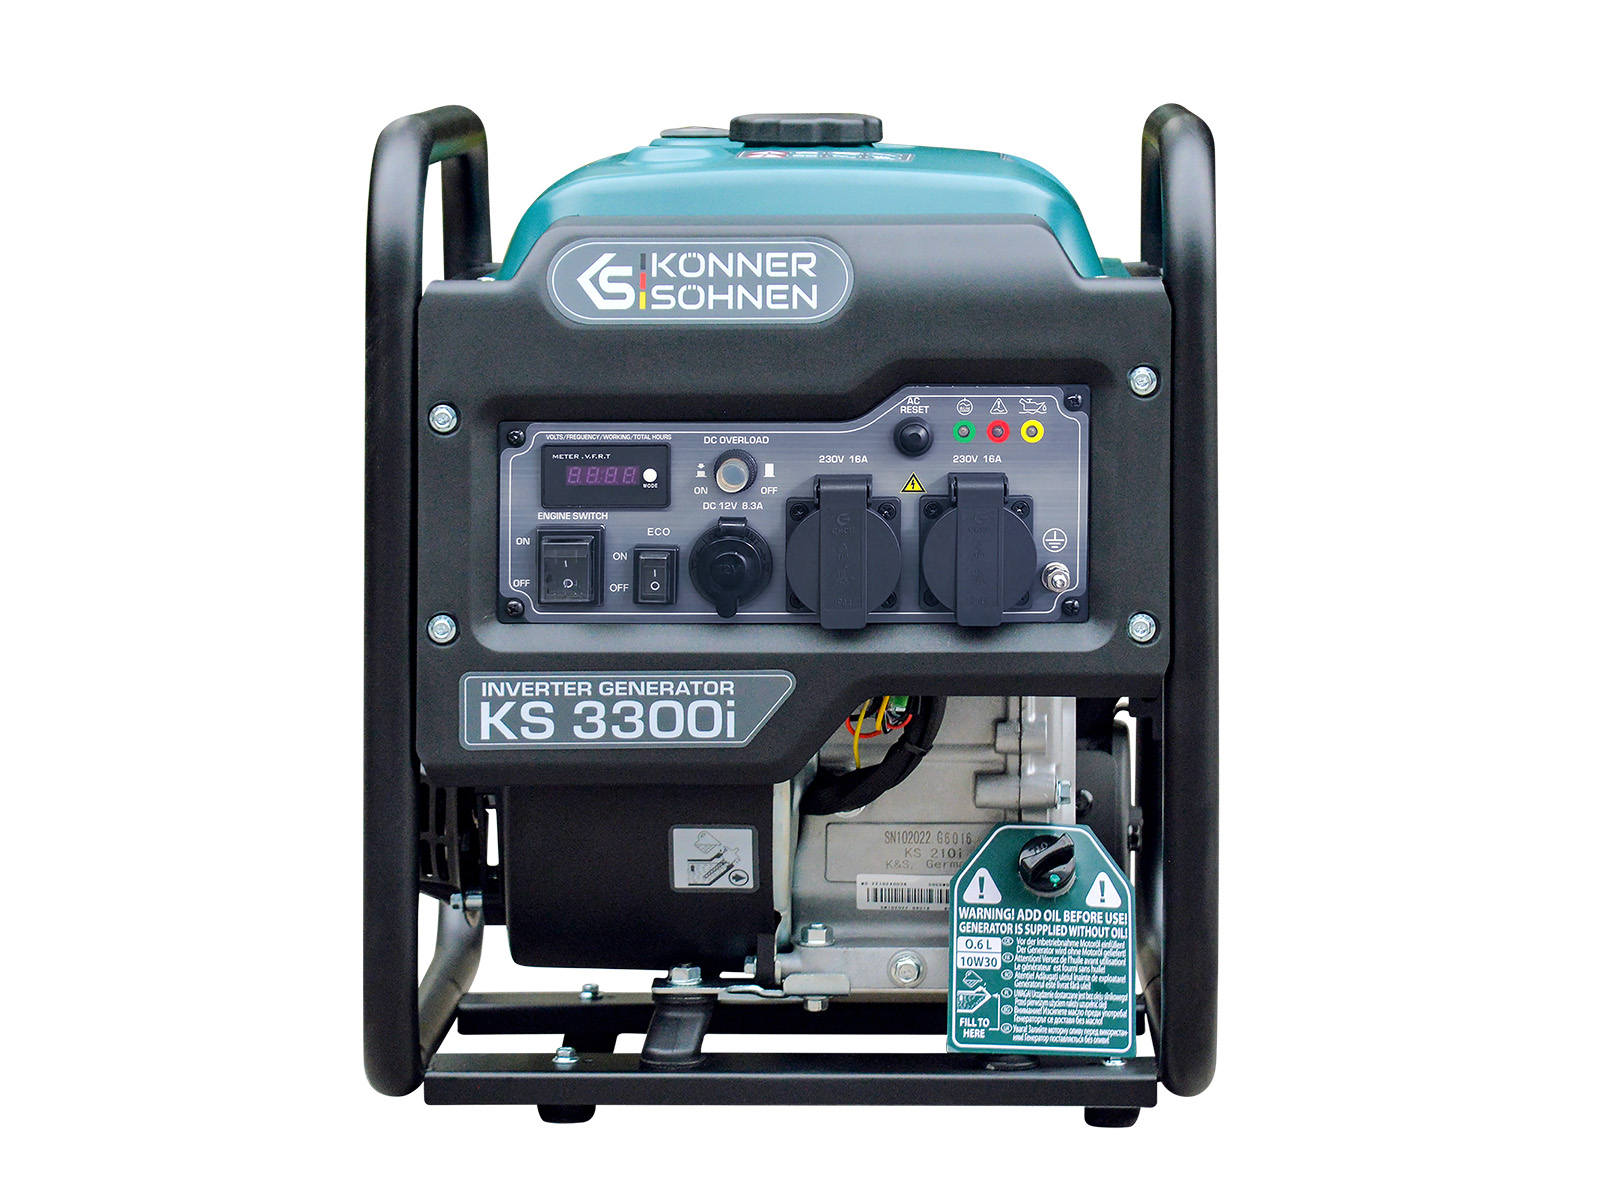 Inverter generator KS 3300i